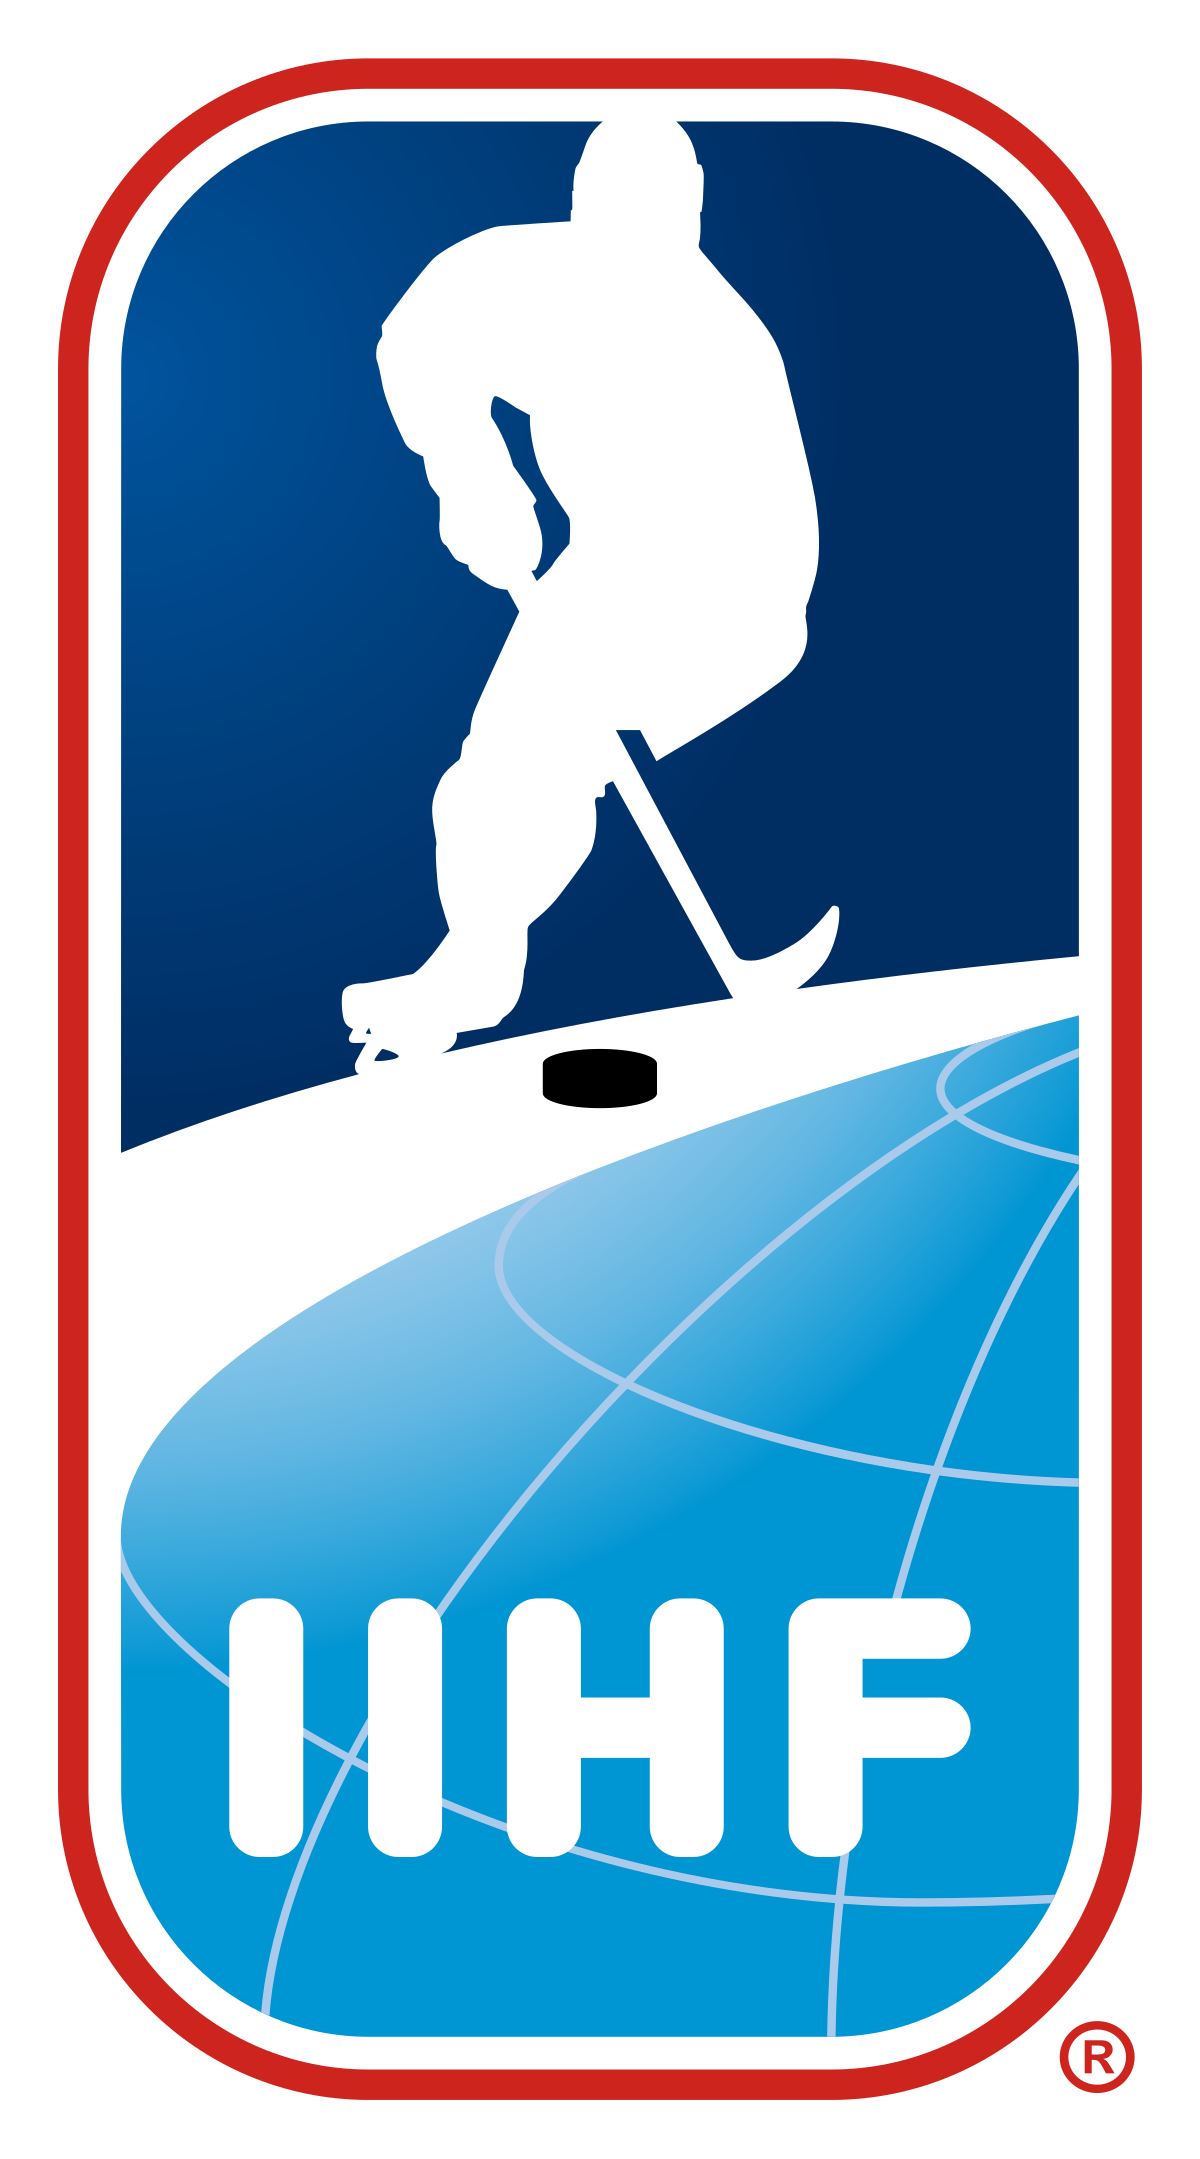 Slovak Ice Hockey Federation elects new President